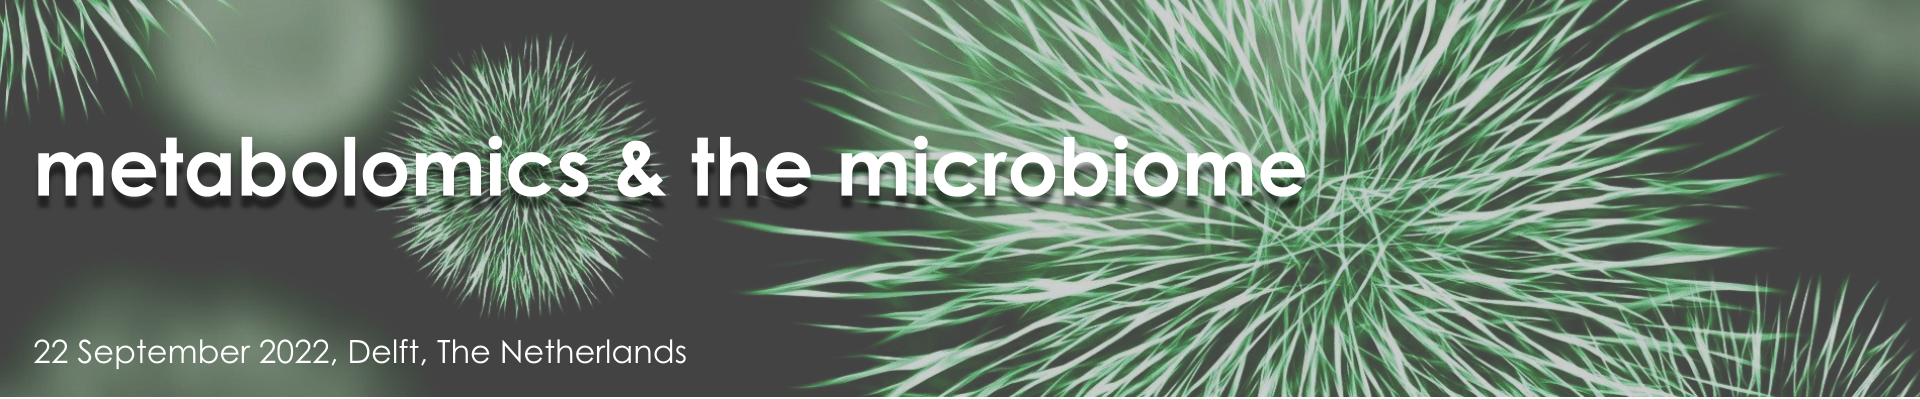 Metabolomics & the microbiome 2020